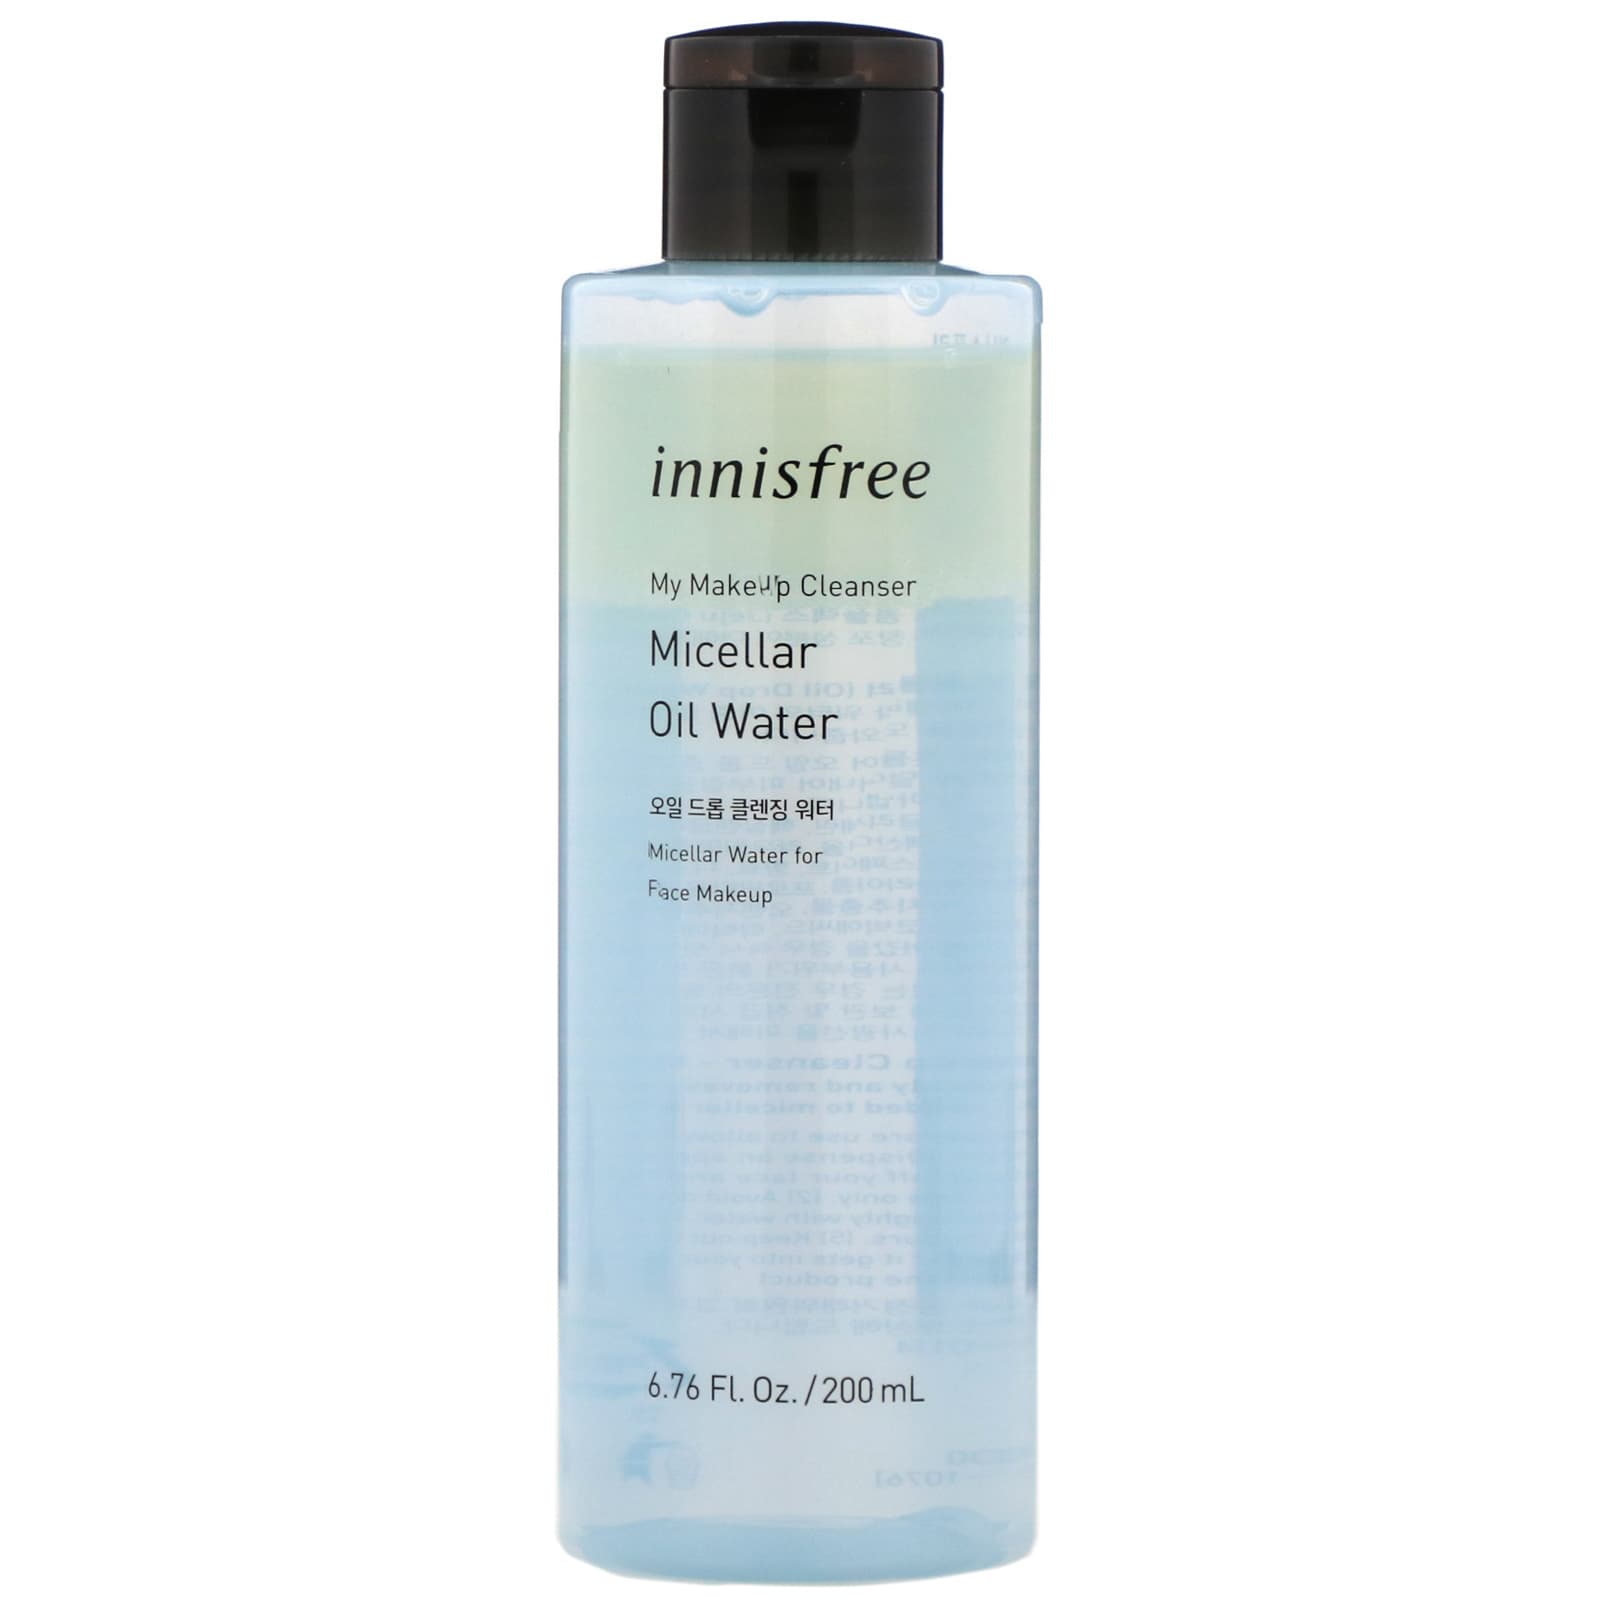 Innisfree, My Makeup Cleanser, Micellar Oil Water